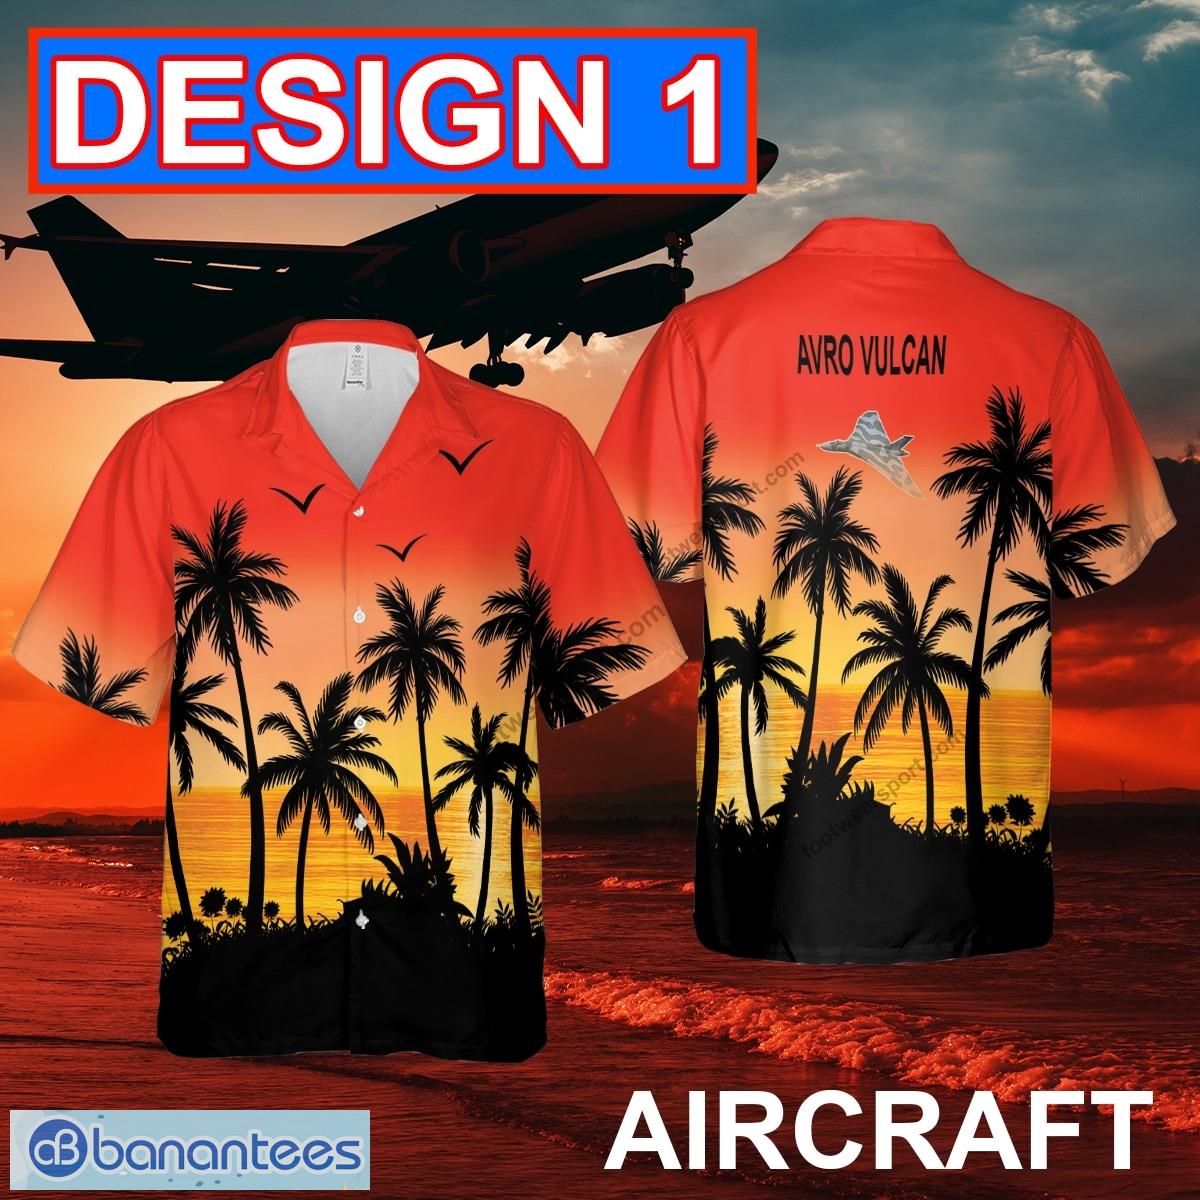 Avro Vulcan Aircraft Aloha Hawaiian Shirt Red Color Gift Summer - Avro Vulcan Aircraft Hawaiian Shirt Multi Design 1